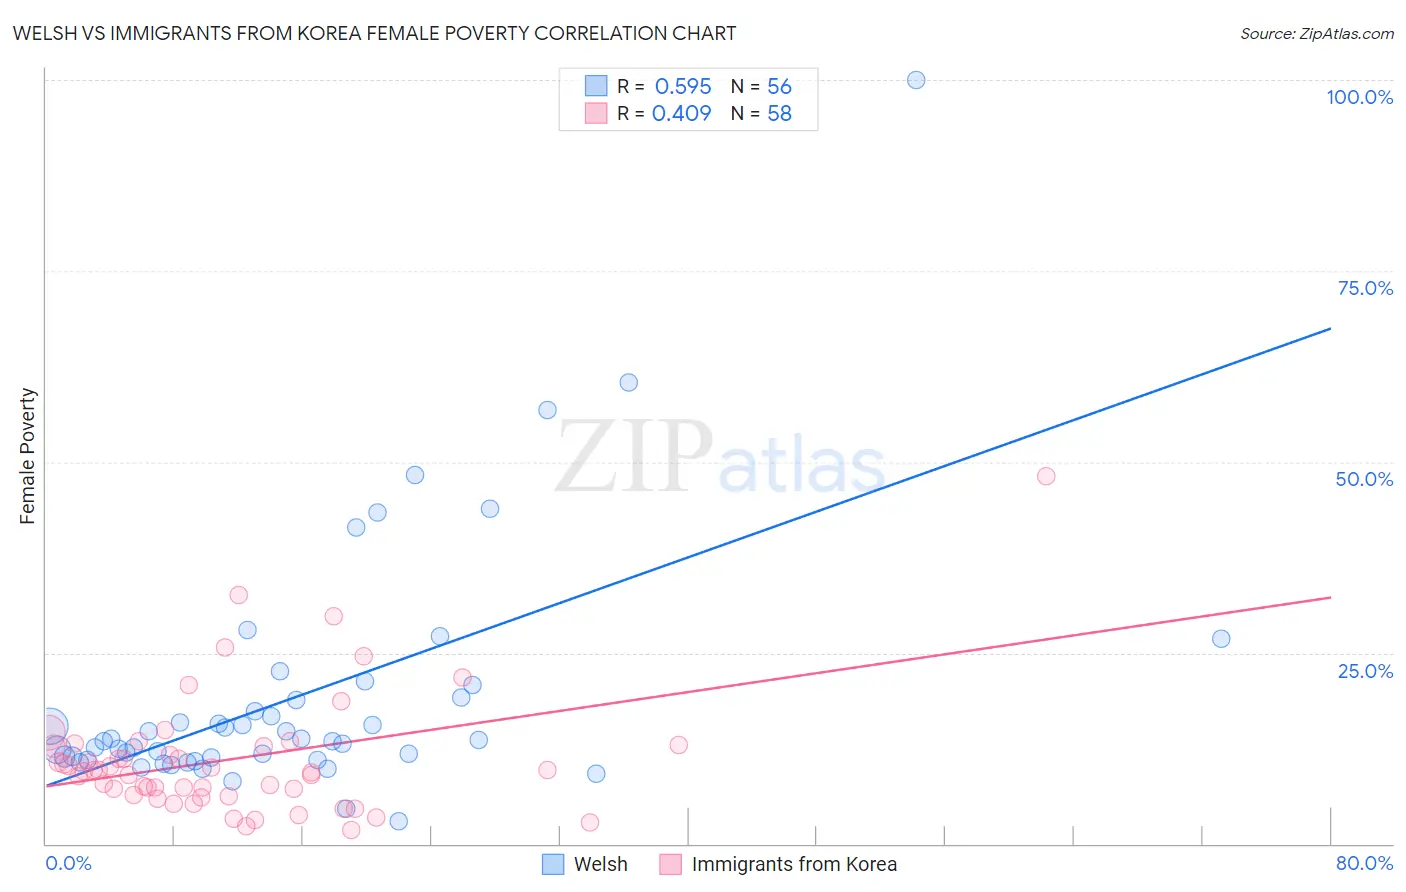 Welsh vs Immigrants from Korea Female Poverty